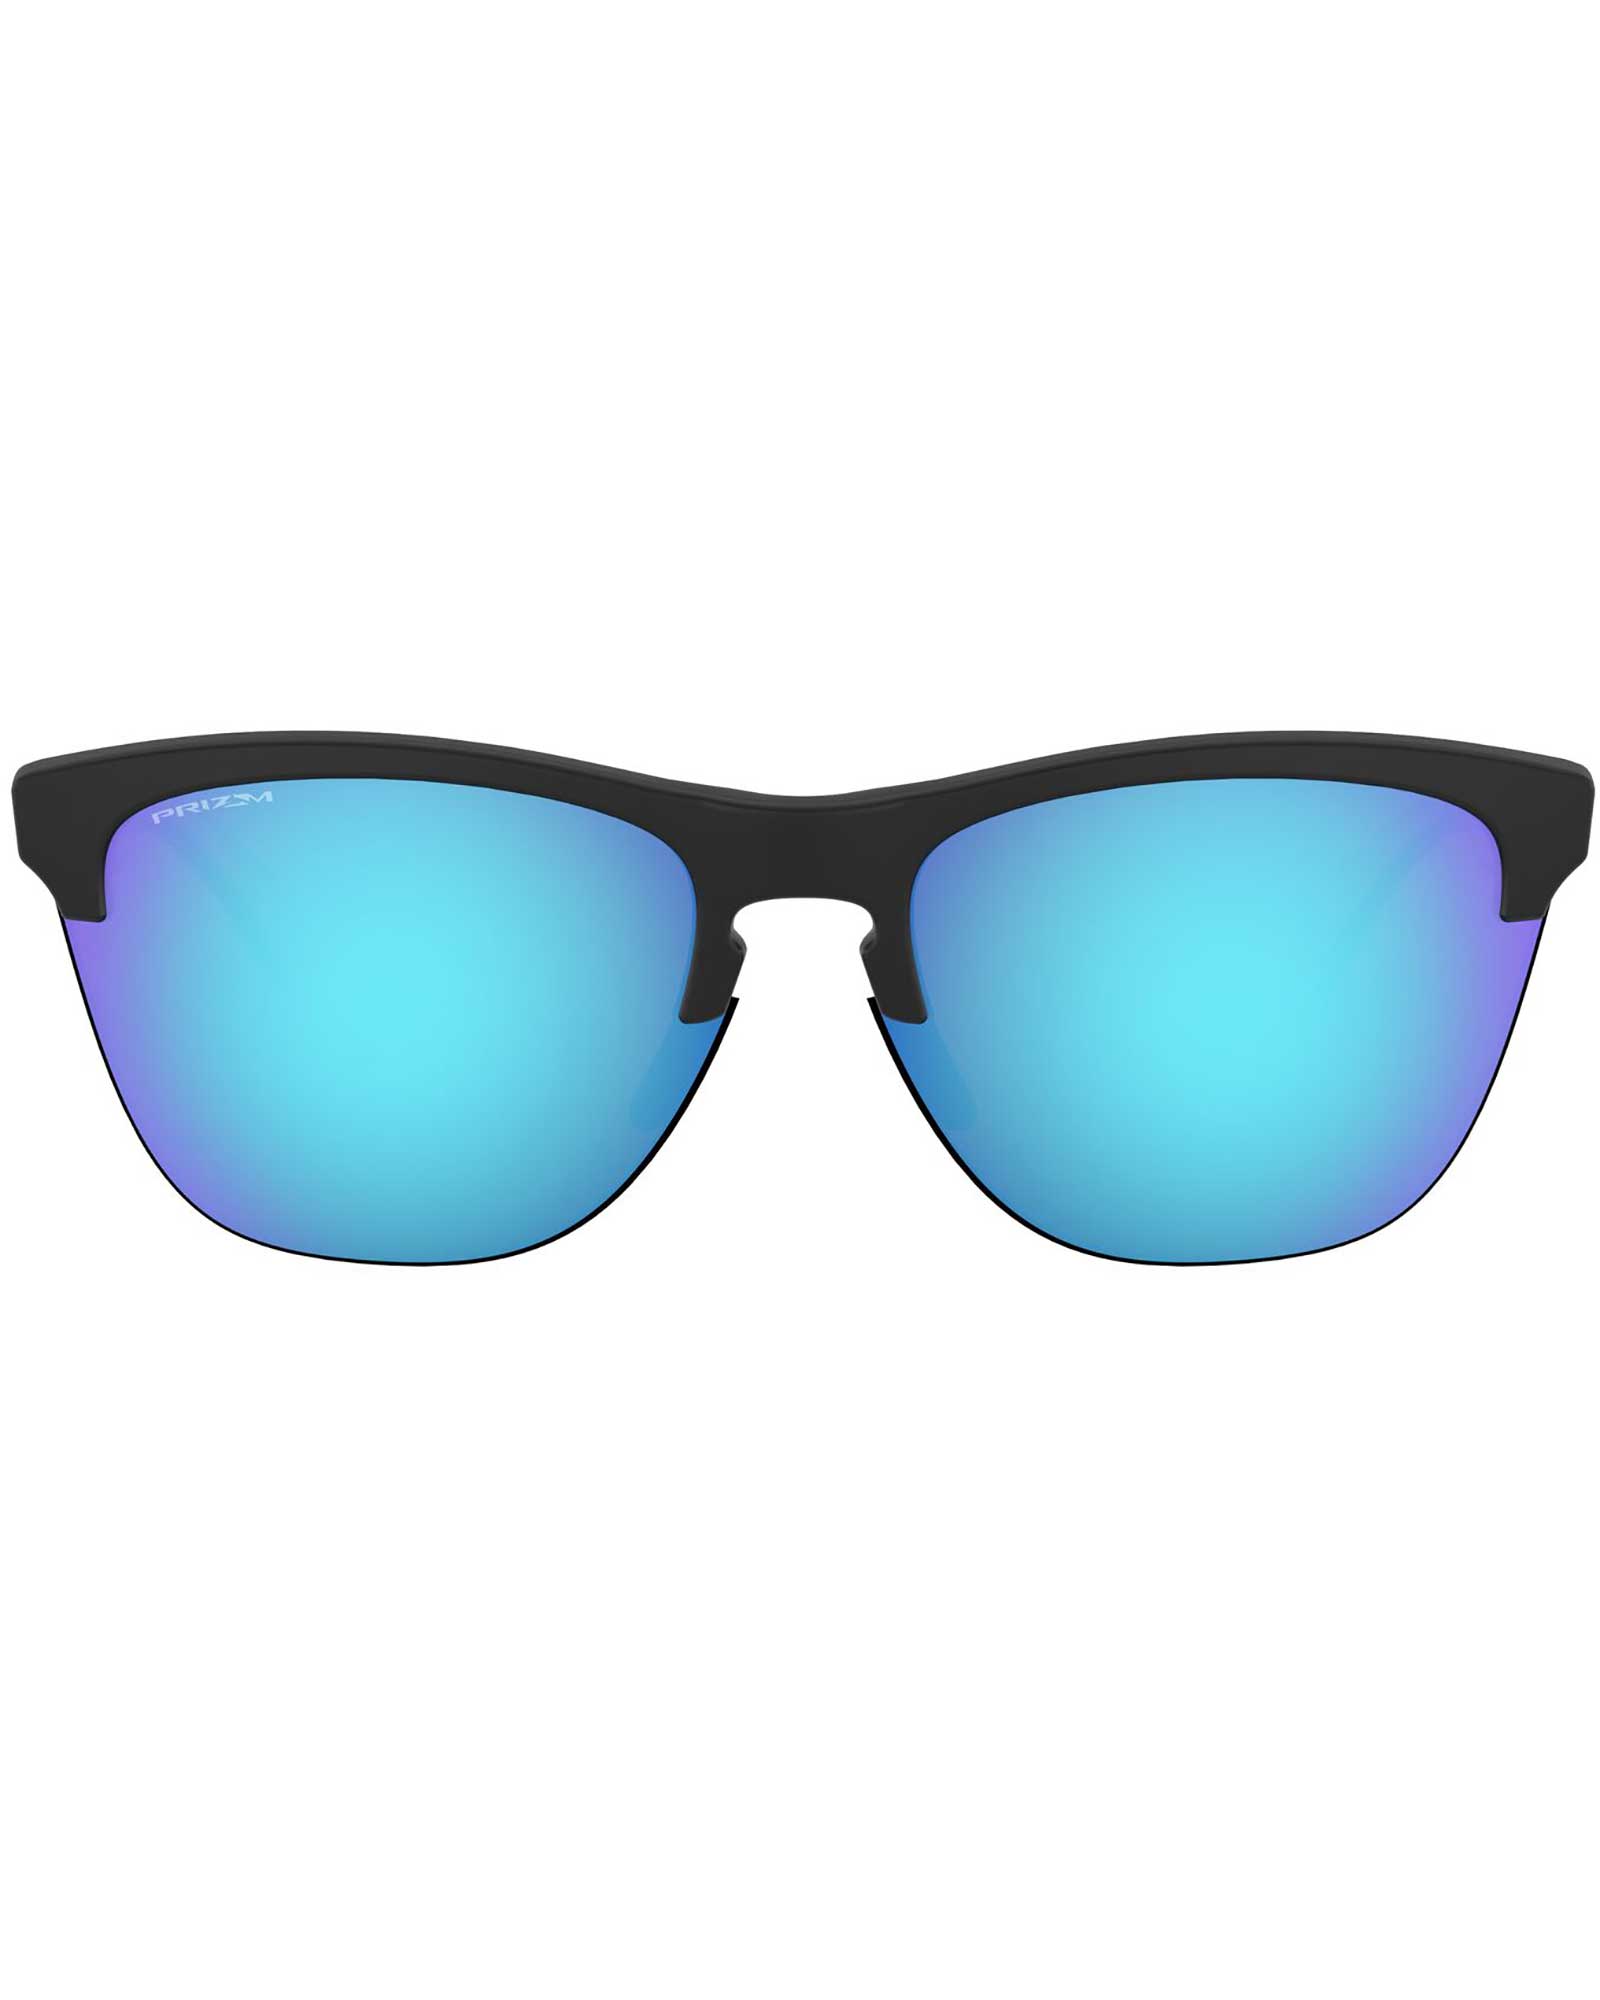 Oakley Frogskins Lite Matte Black / Prizm Sapphire Sunglasses - Matte Black